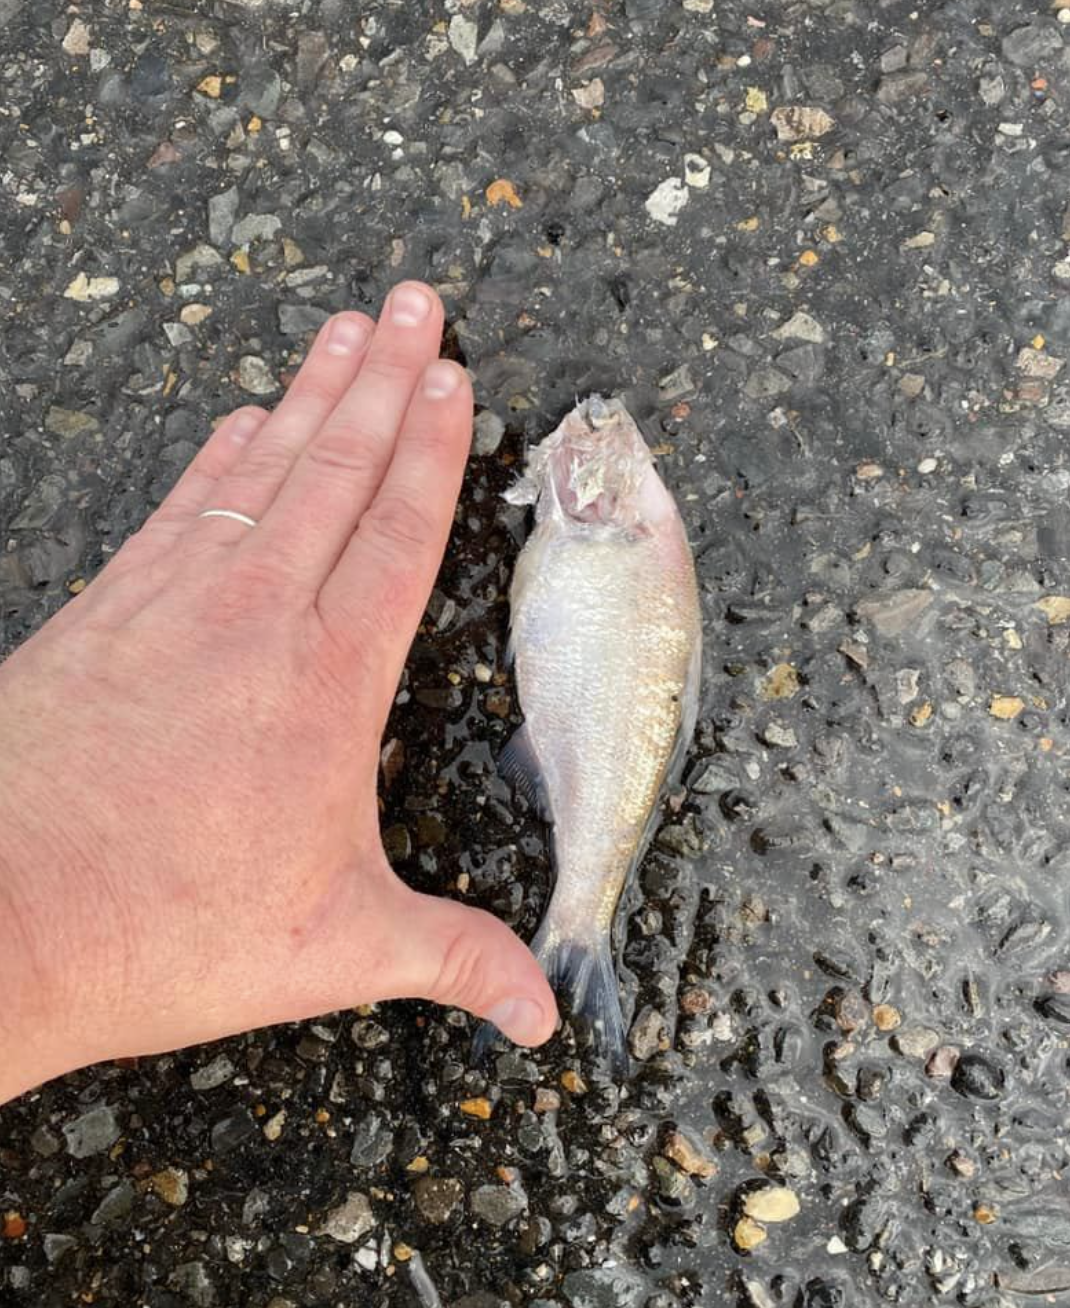 Dead fish Texarkana parking lot